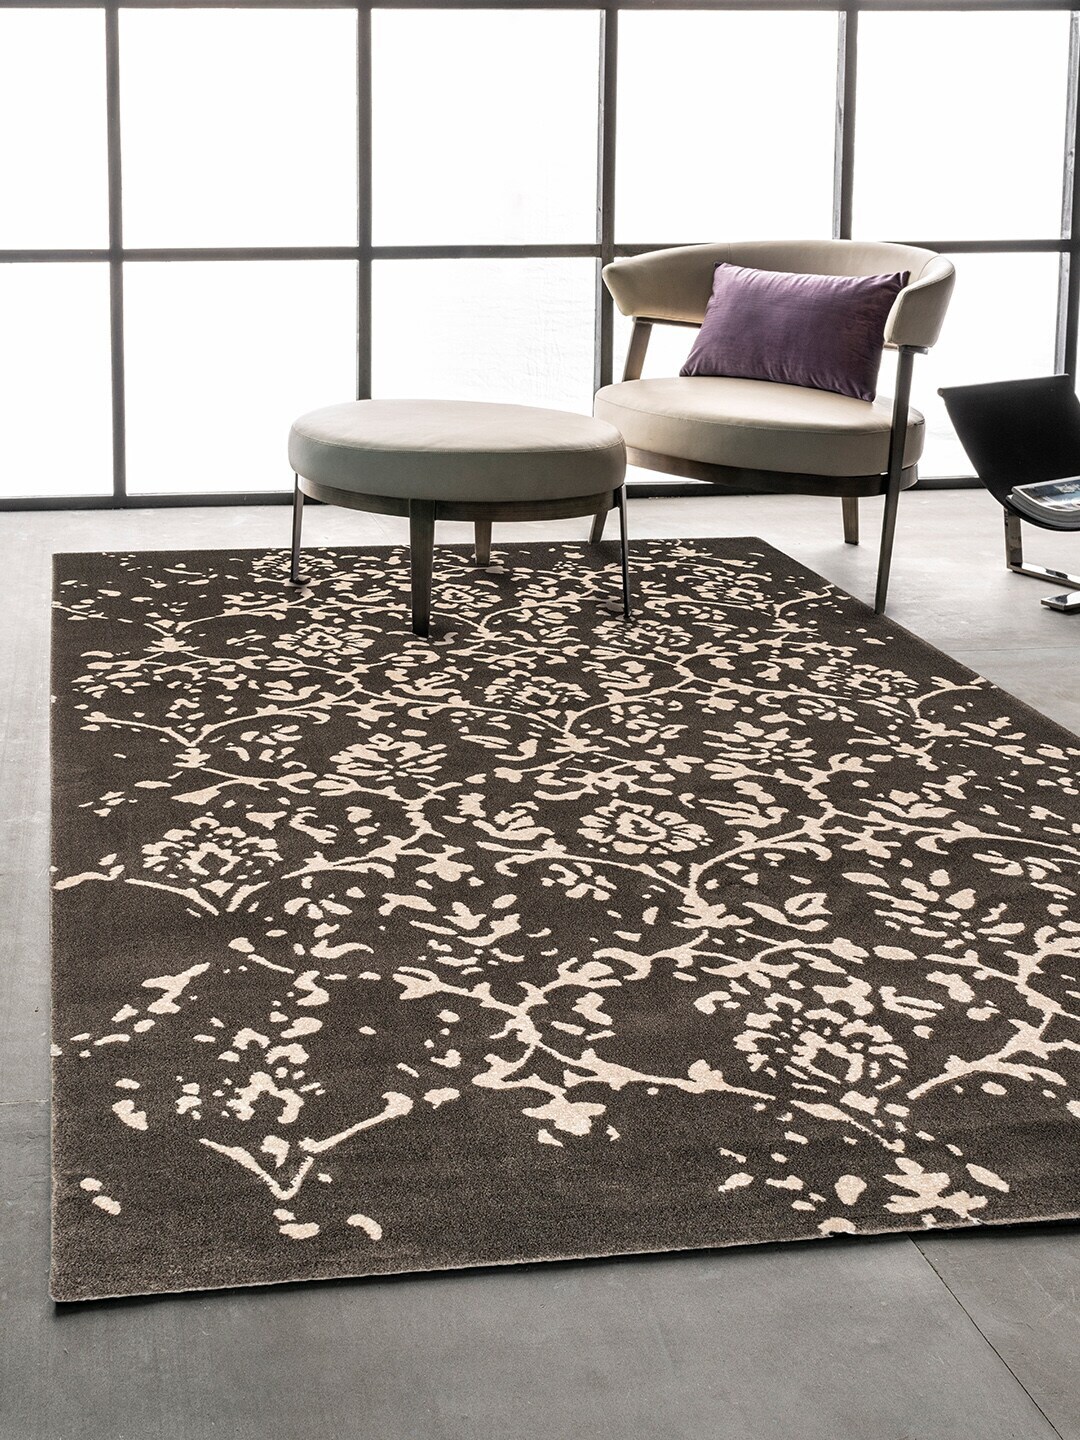 DDecor Grey & White Geometric Printed Carpet Price in India